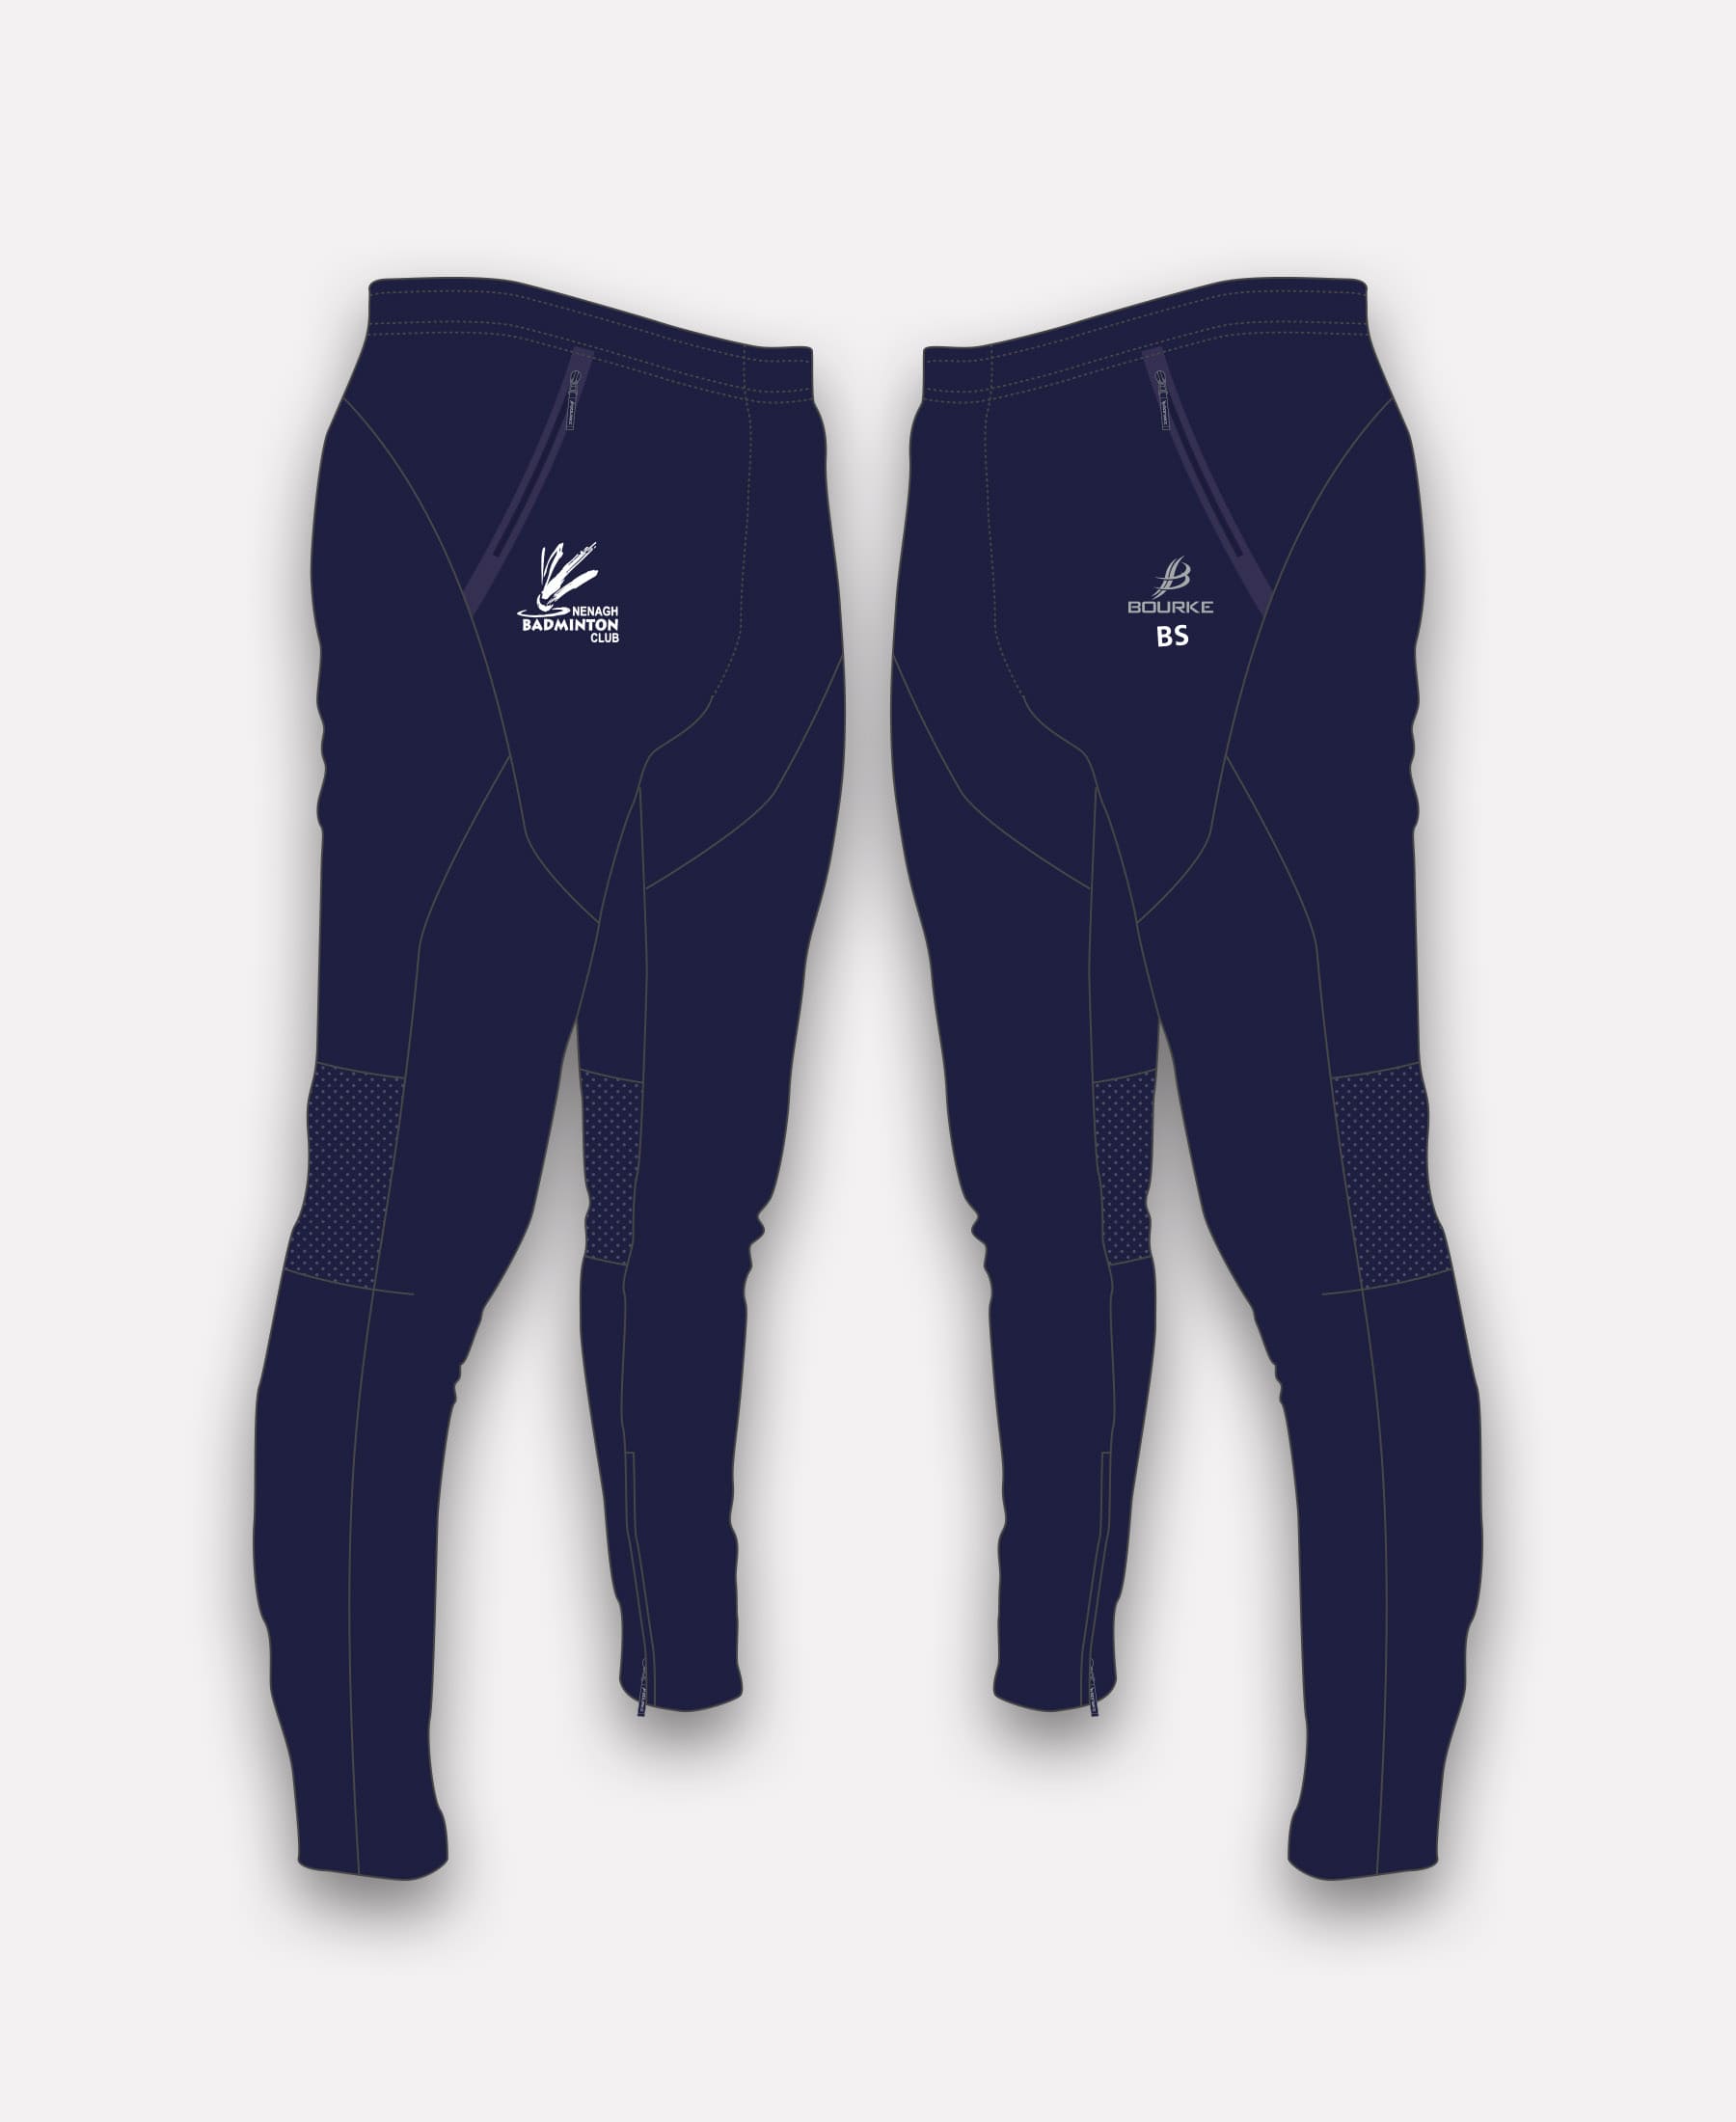 Nenagh Badminton Club Croga Skinny Pants (Navy)